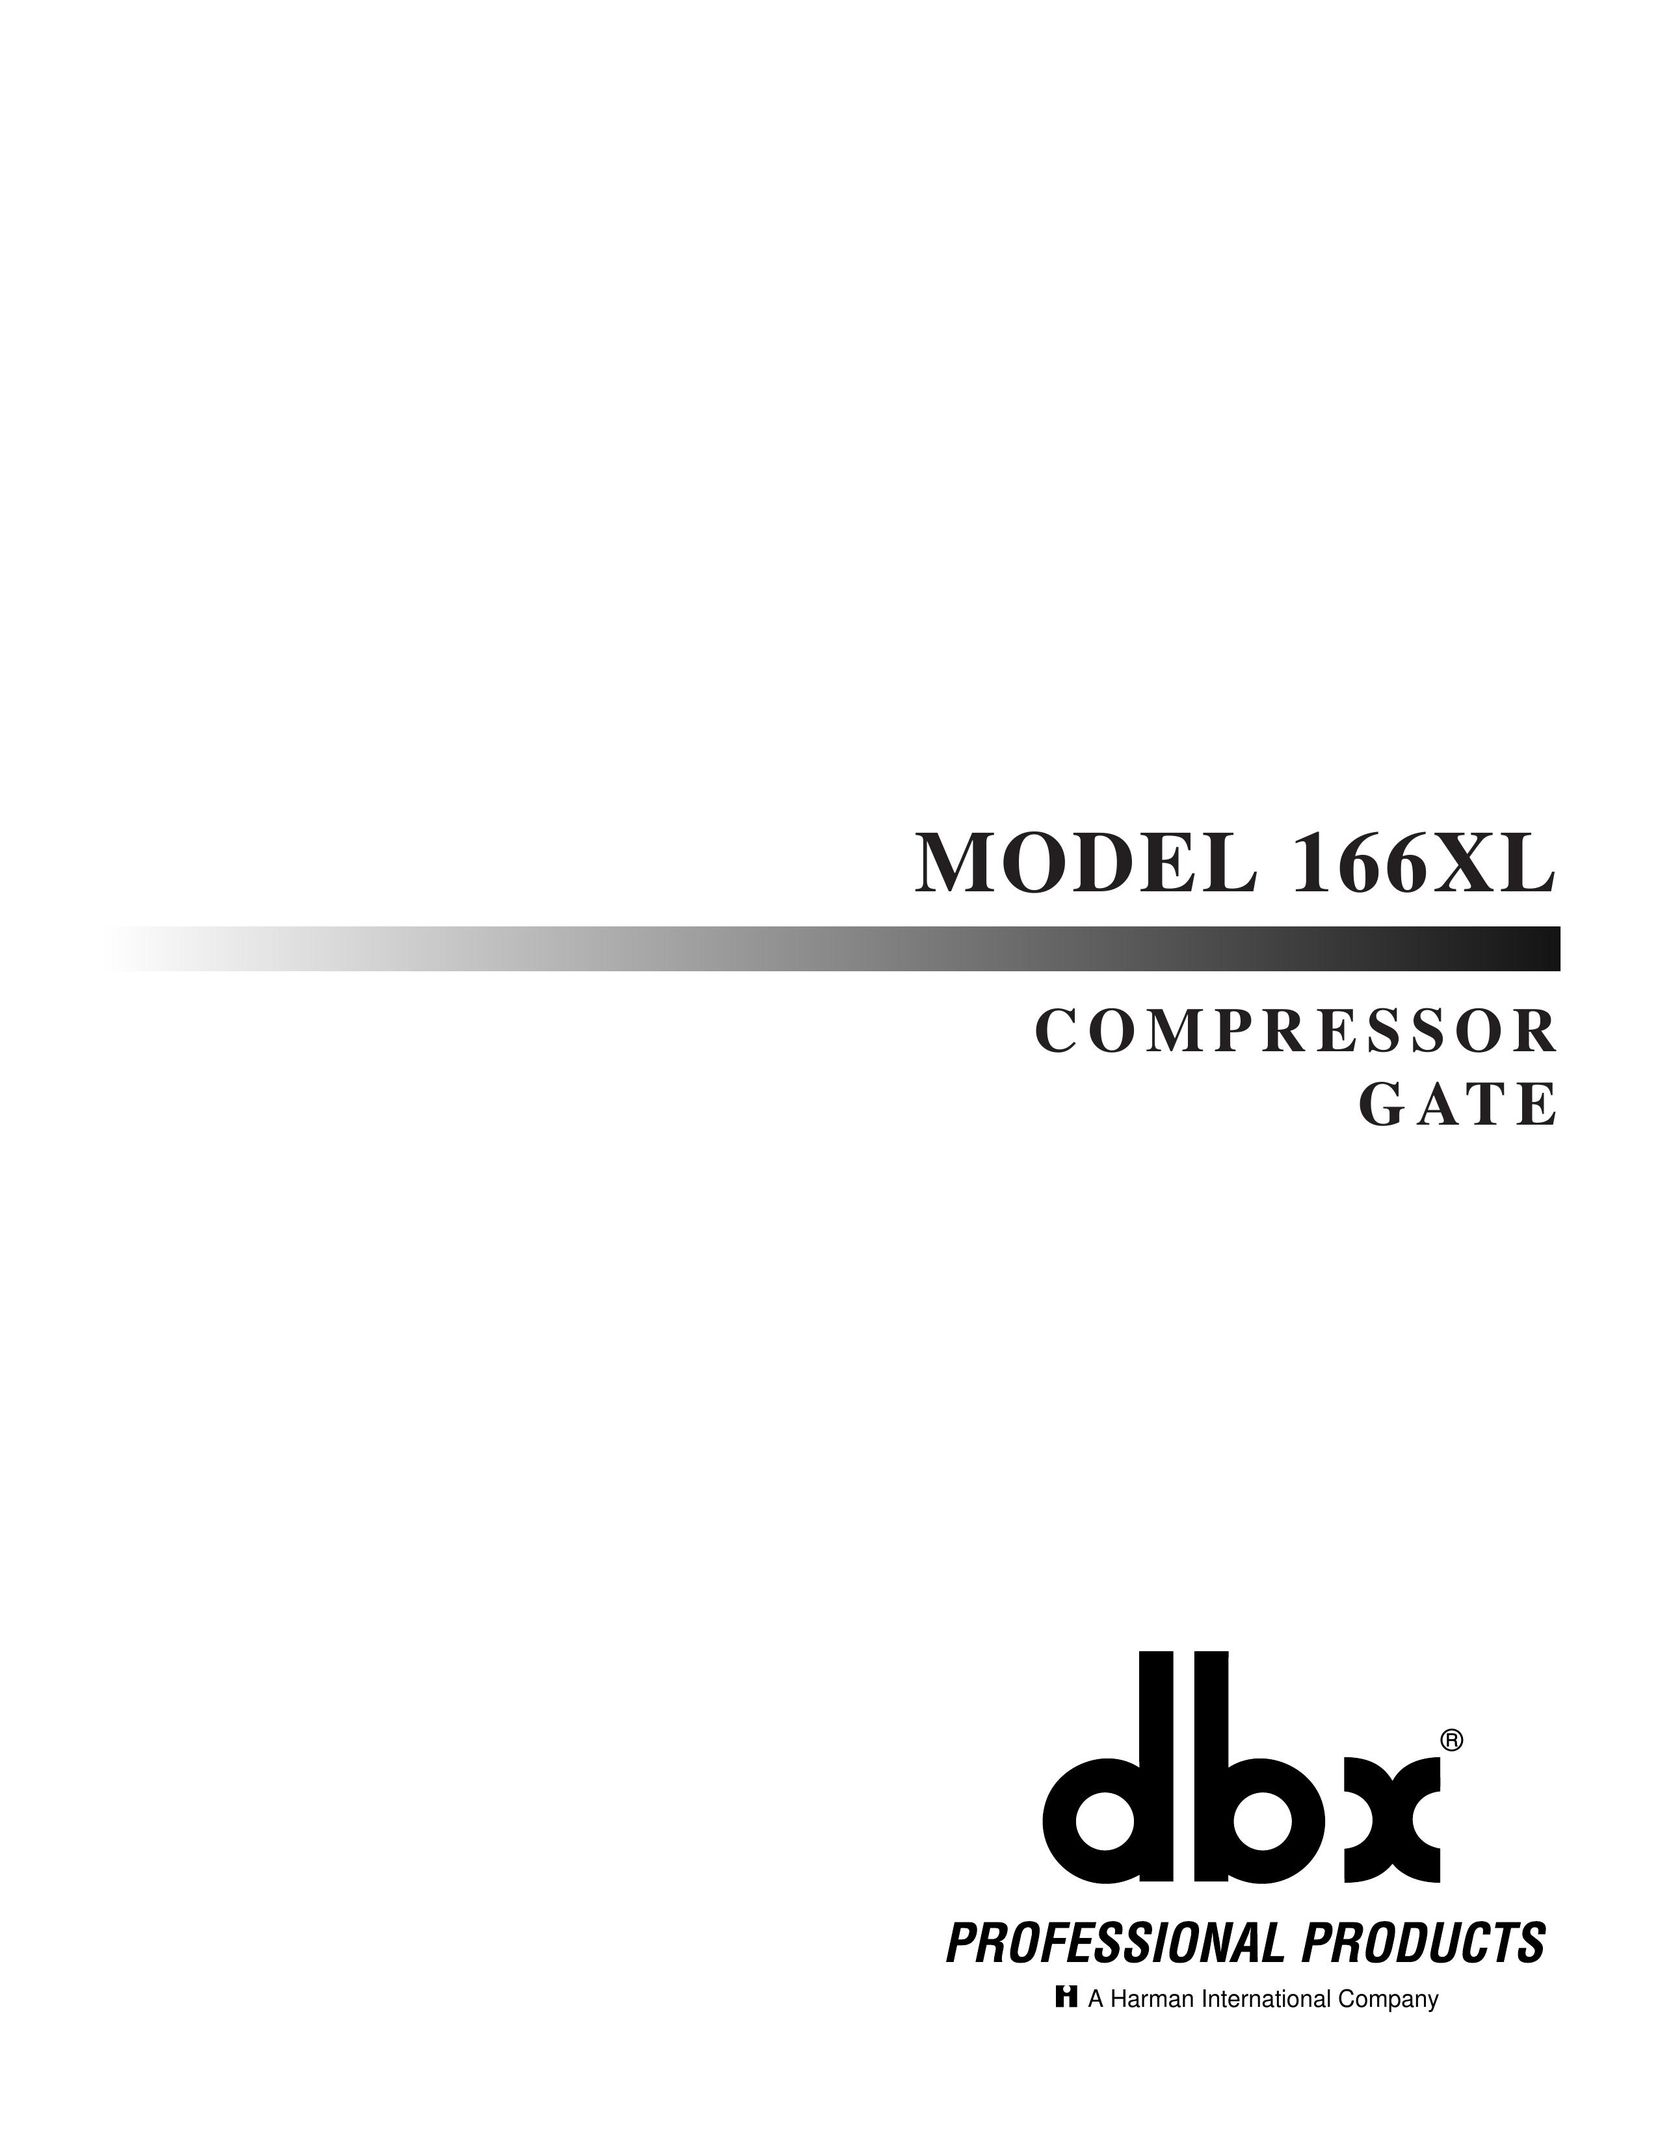 dbx Pro 166XL Air Compressor User Manual